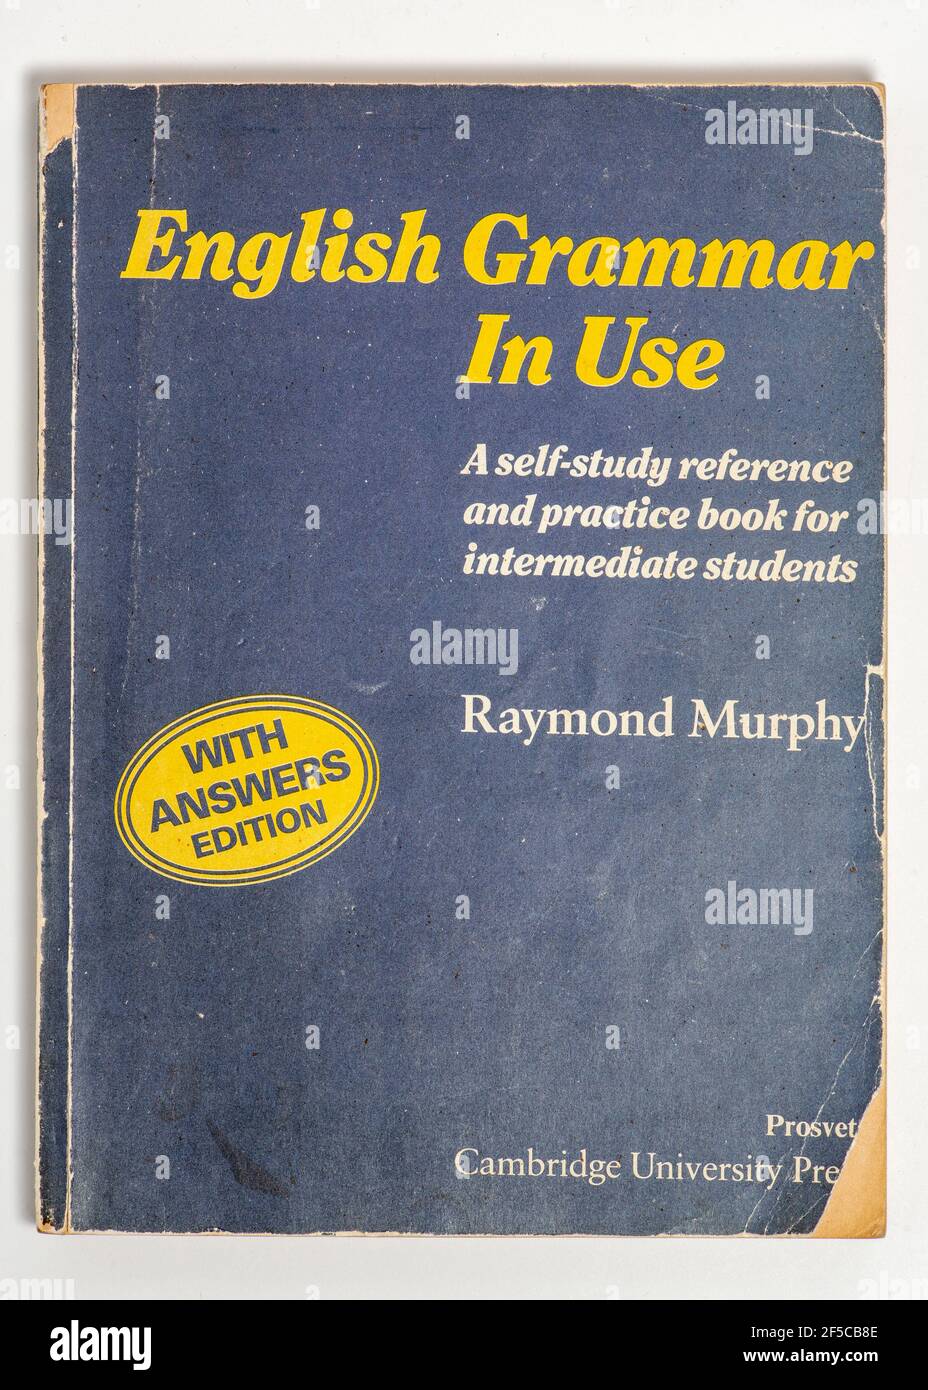 English Grammar in Use Raymond Murphy